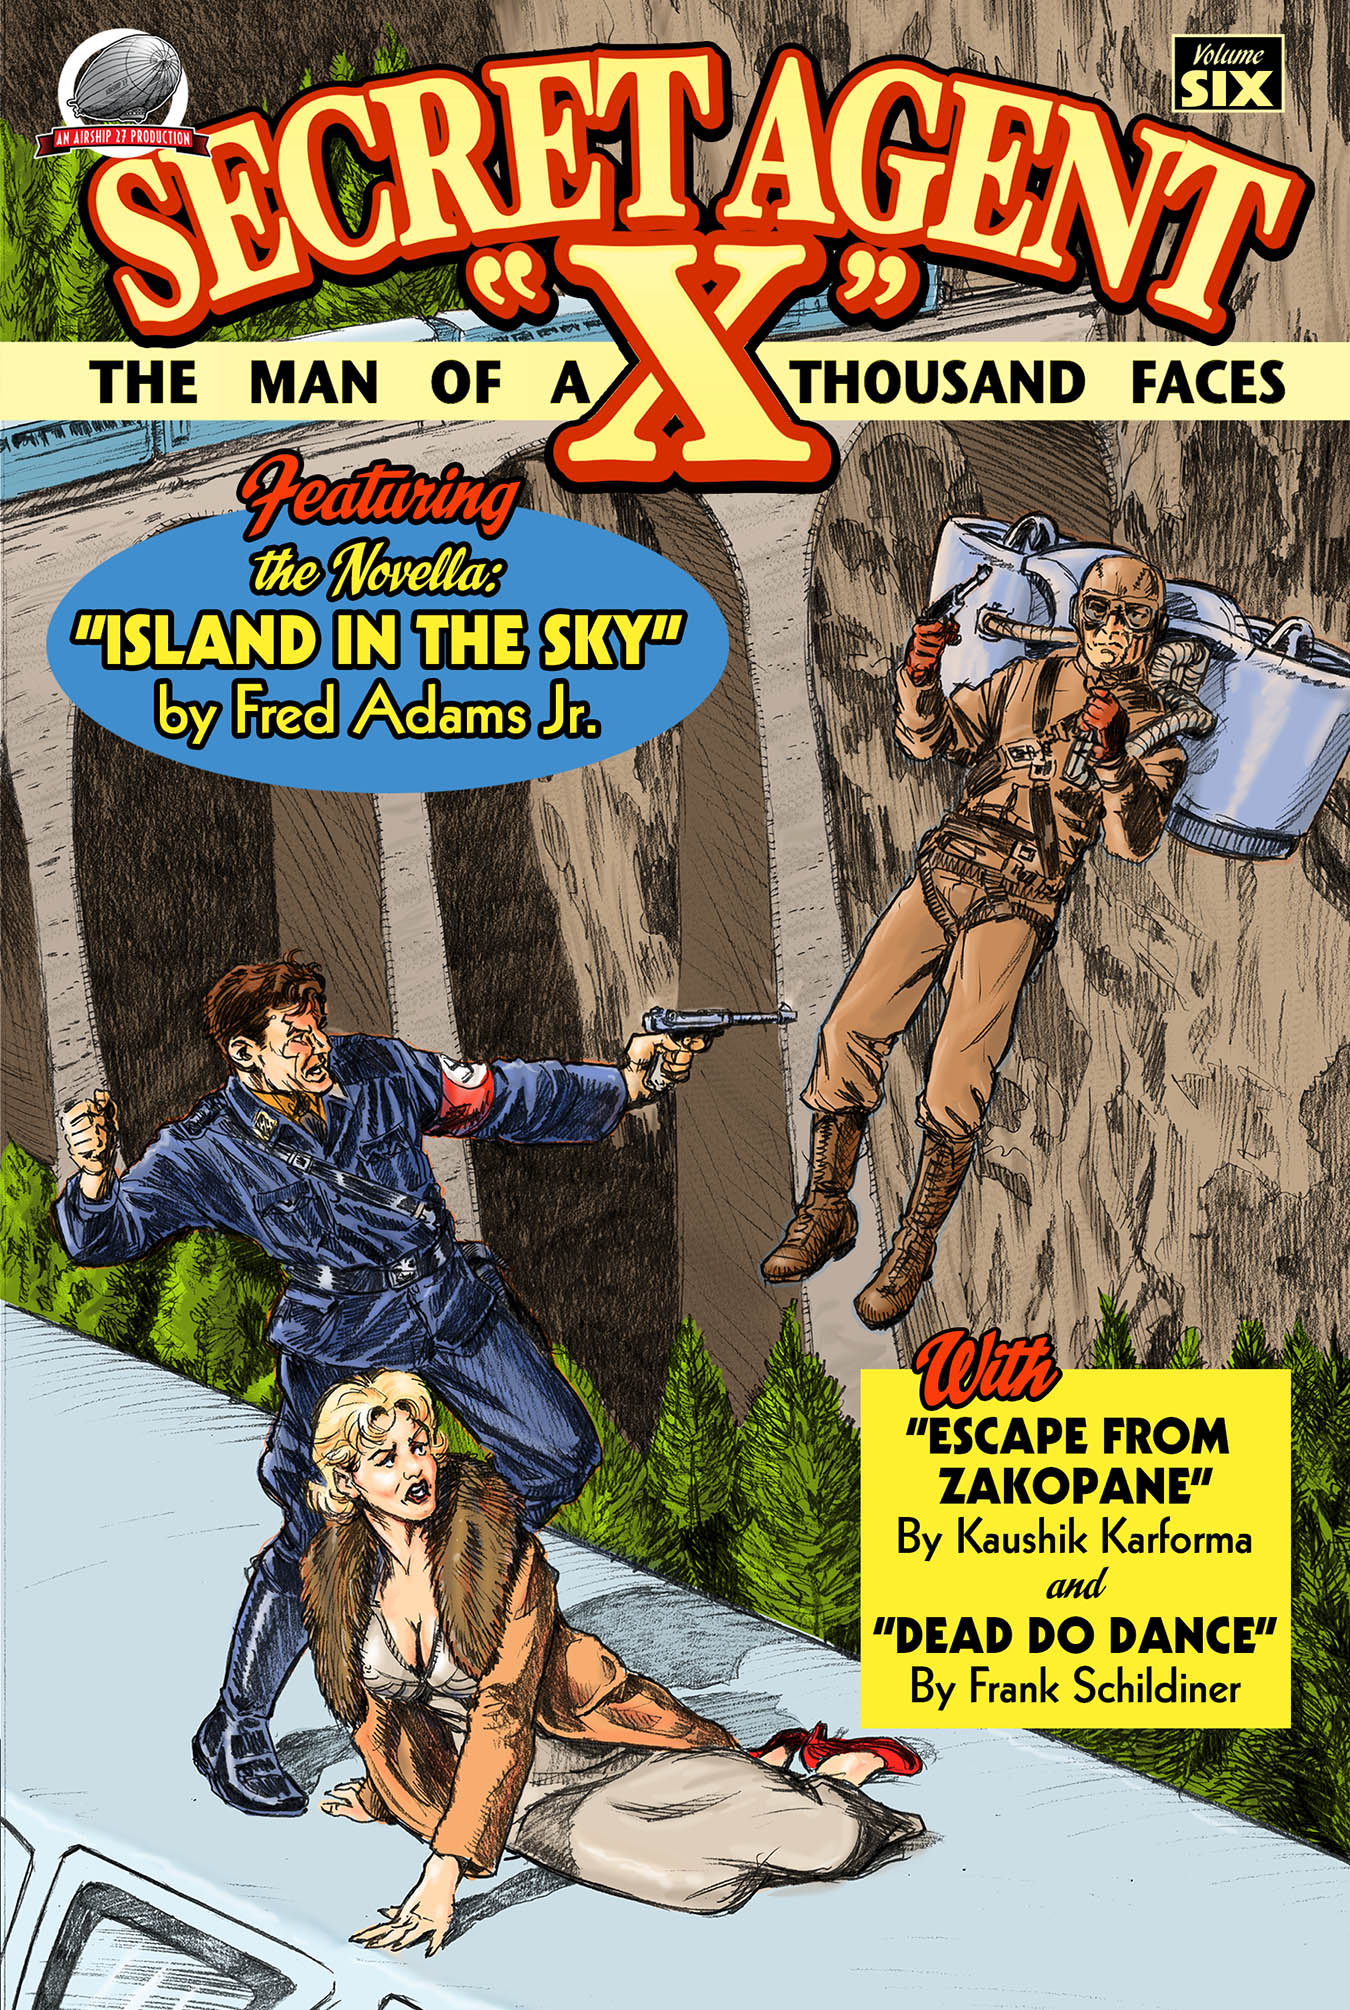 Secret Agent "X" Volume 6 cover